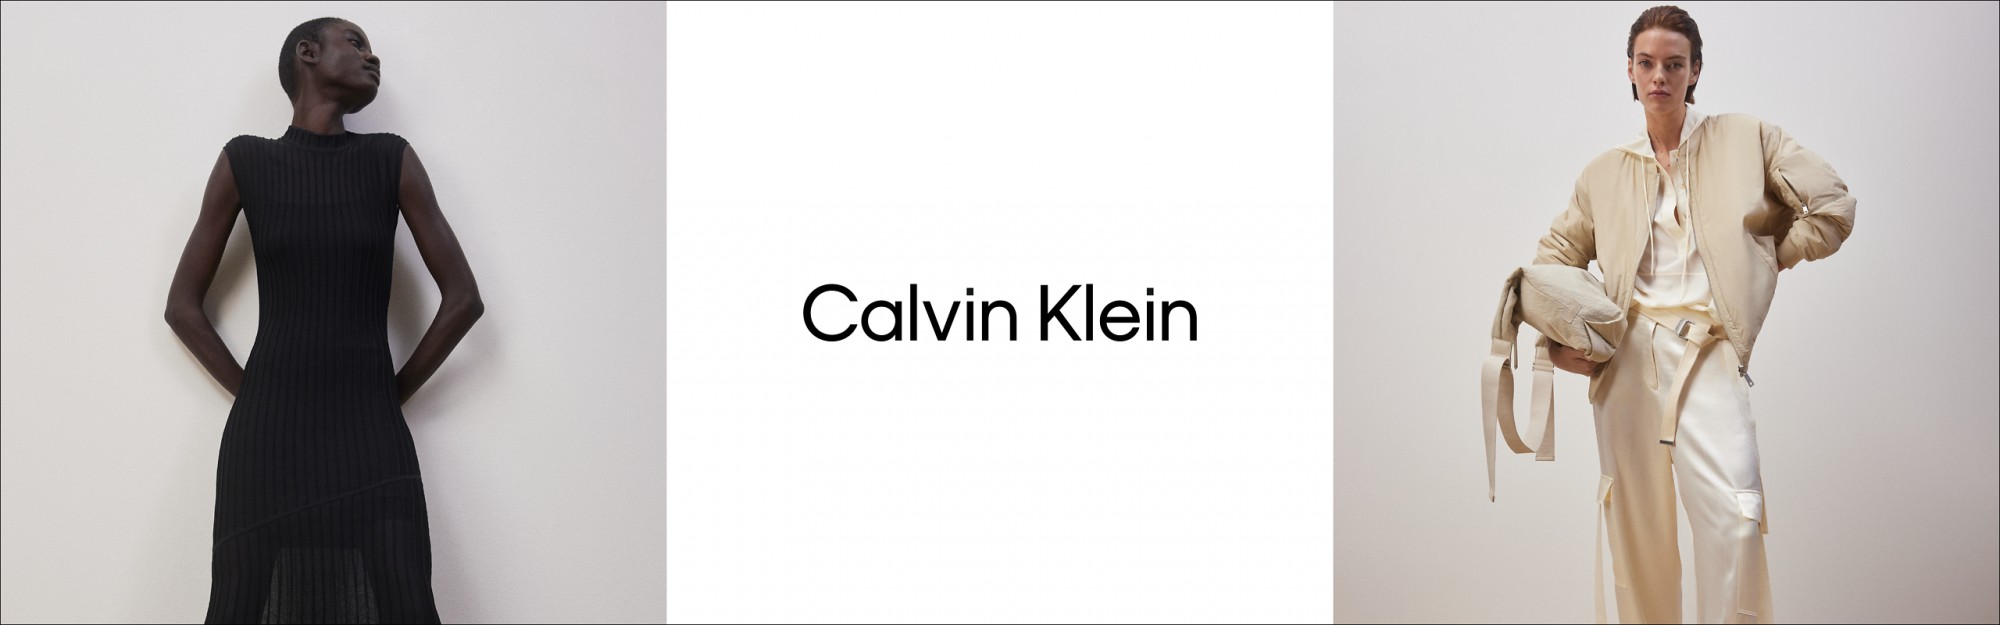 Calvin Klein homem e mulher